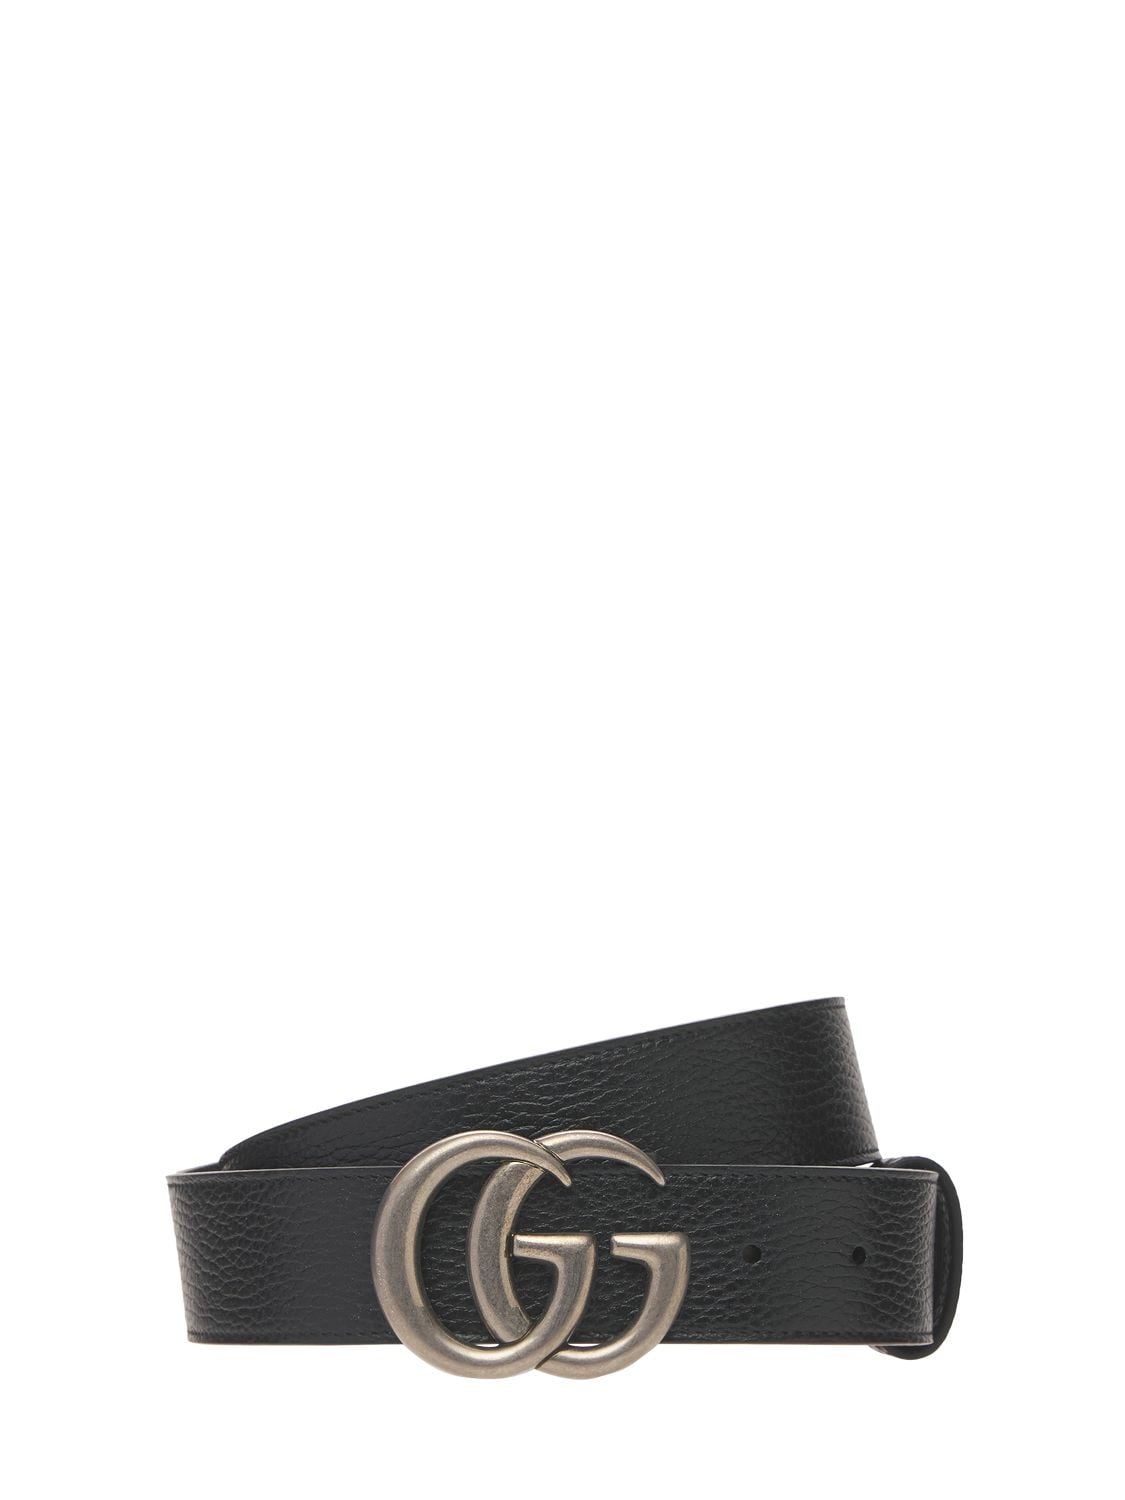 Gucci GG Marmont Wide Waist Belt - Farfetch